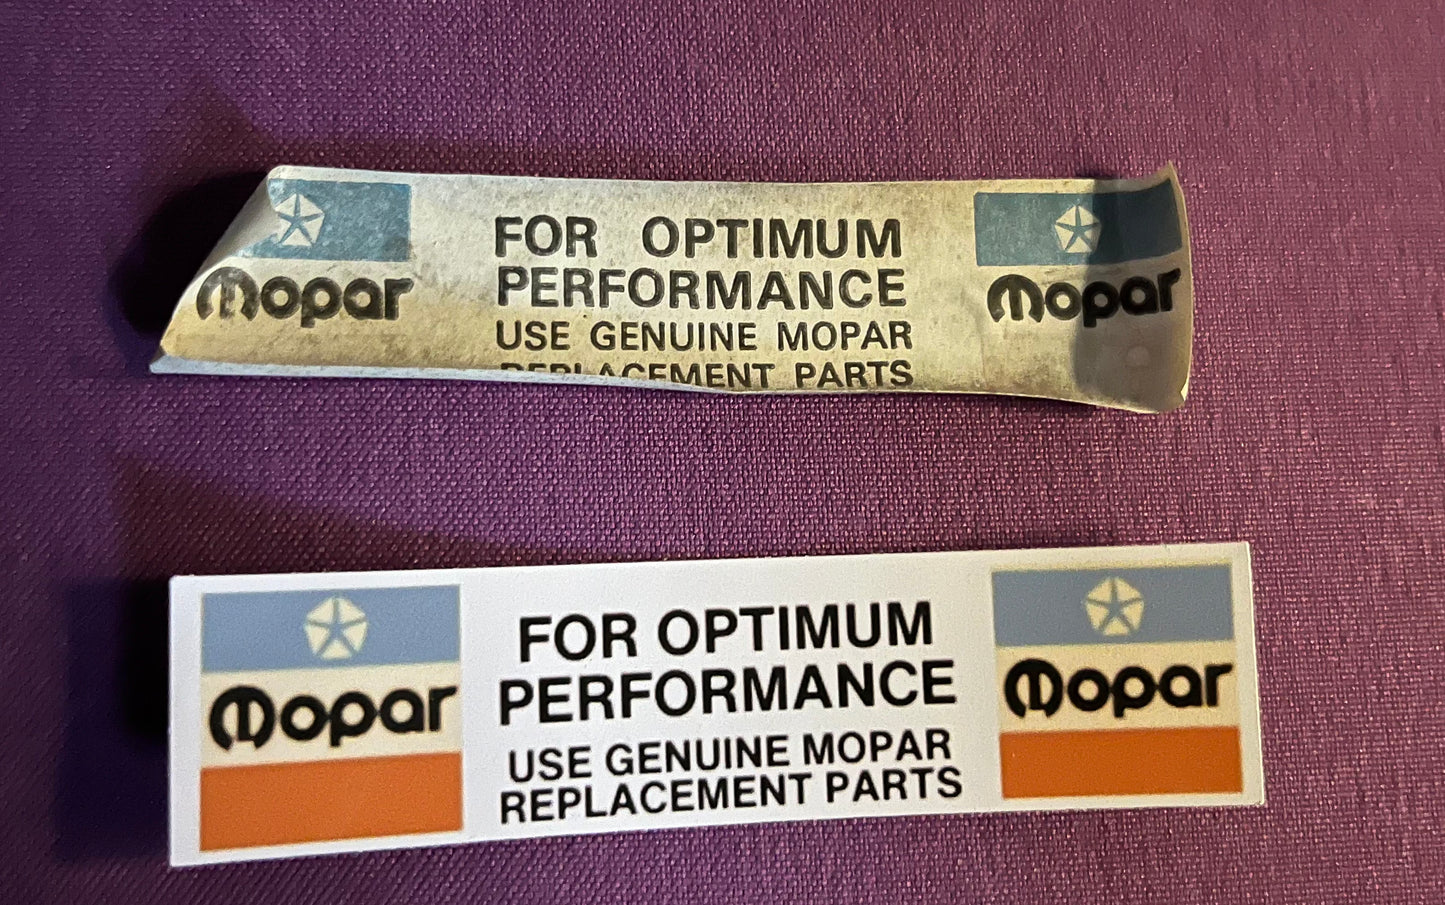 Mopar performance parts replica sticker